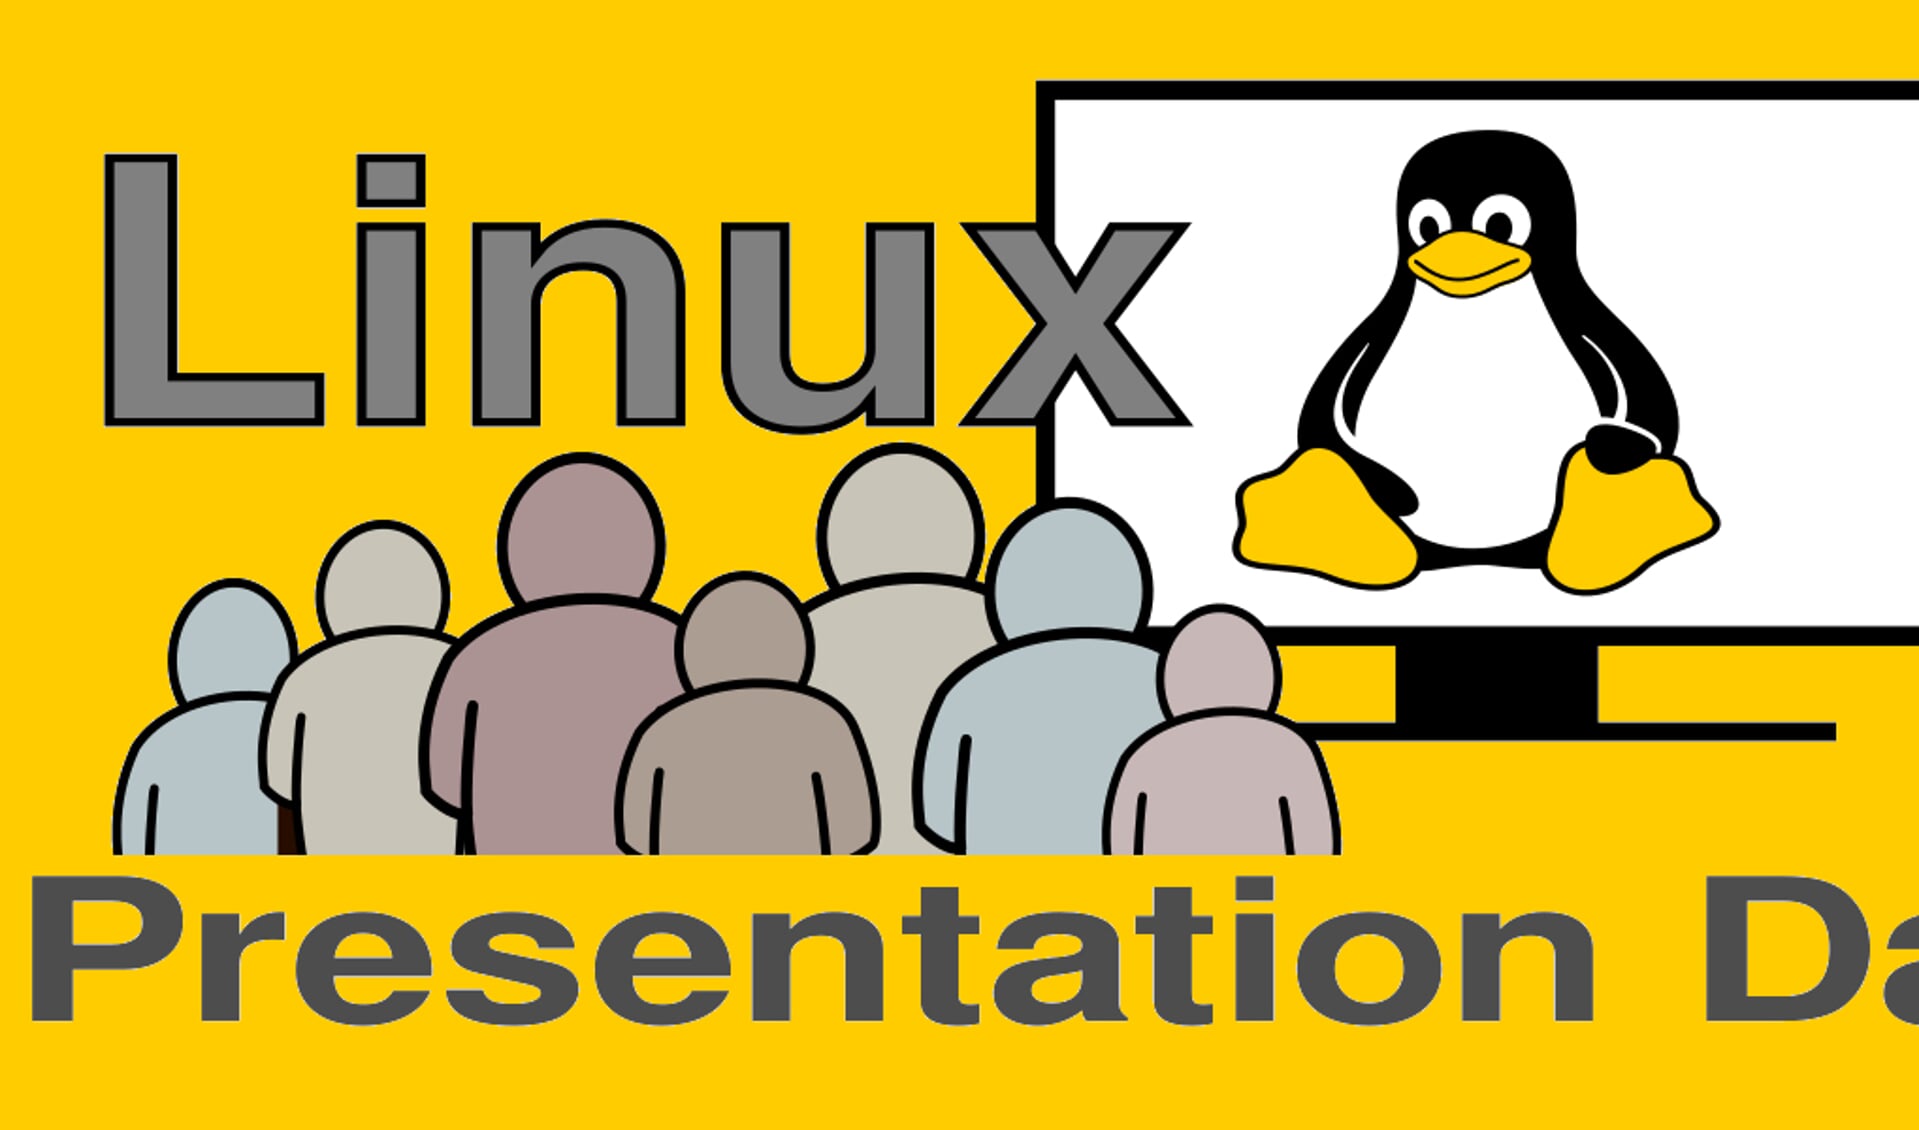 Linux Presentation Day